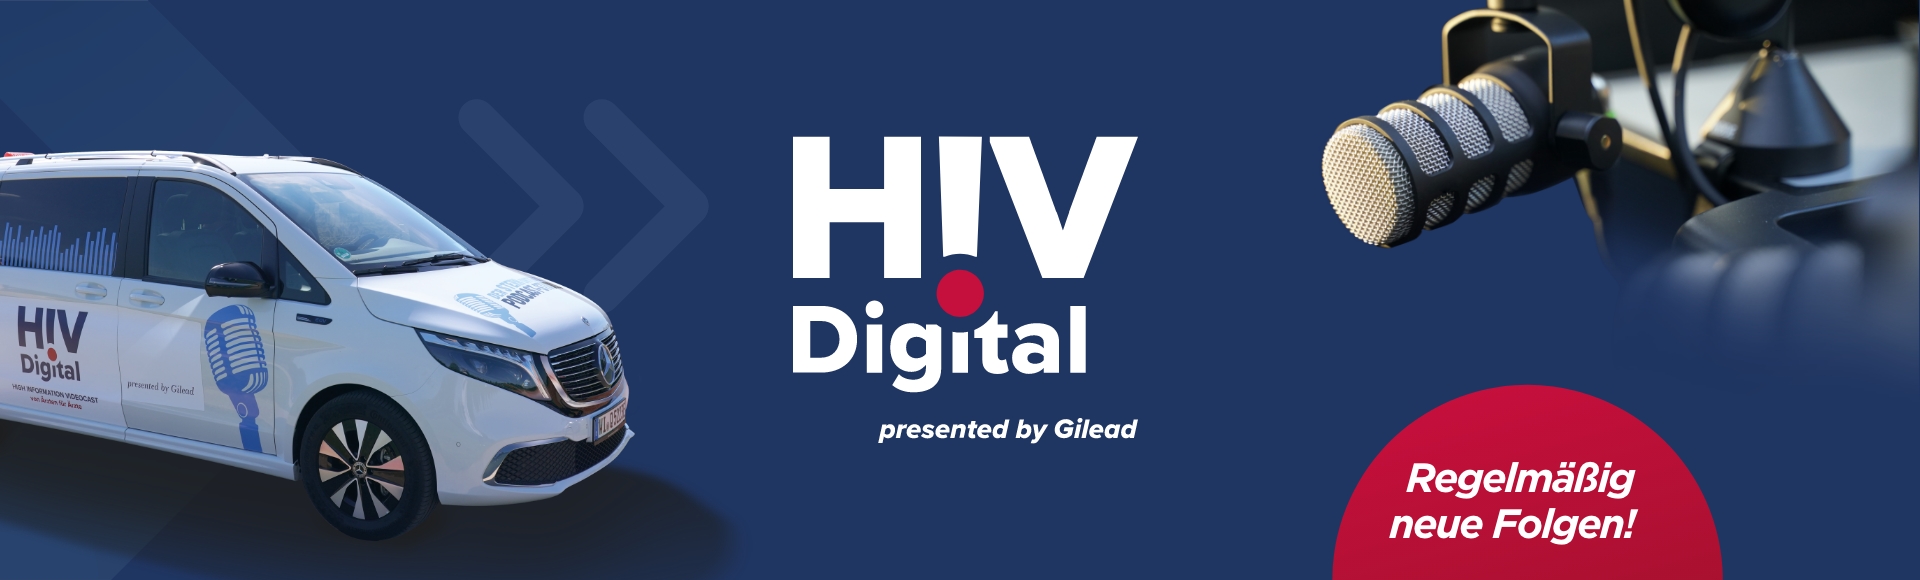 HIV.Digital